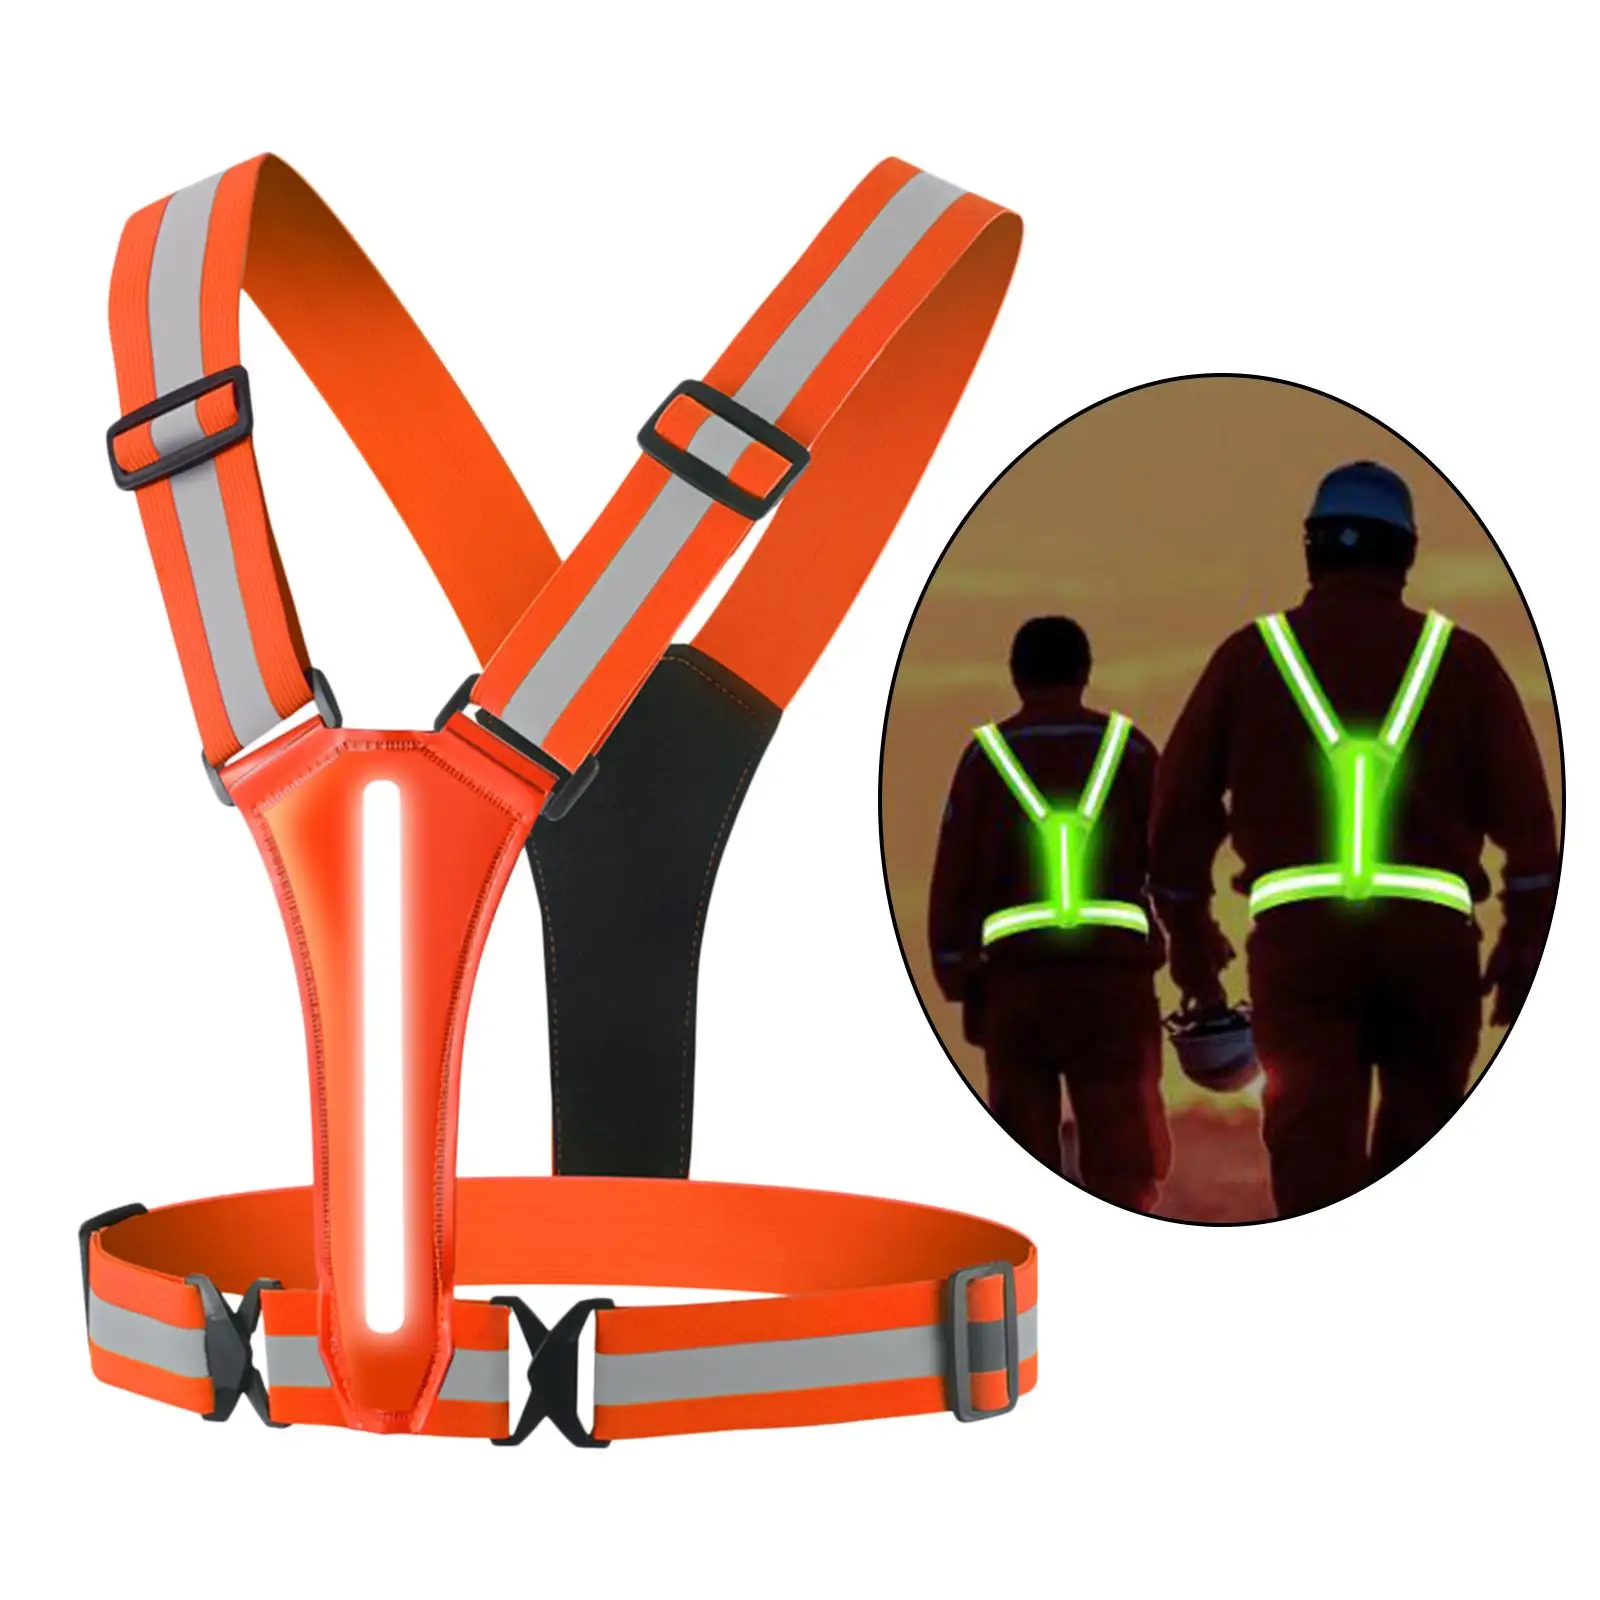 LED Reflective Vest Adjustable USB Rechargeable Double-Side LED Strips Running Gear for Night Walking Running Men Women Children